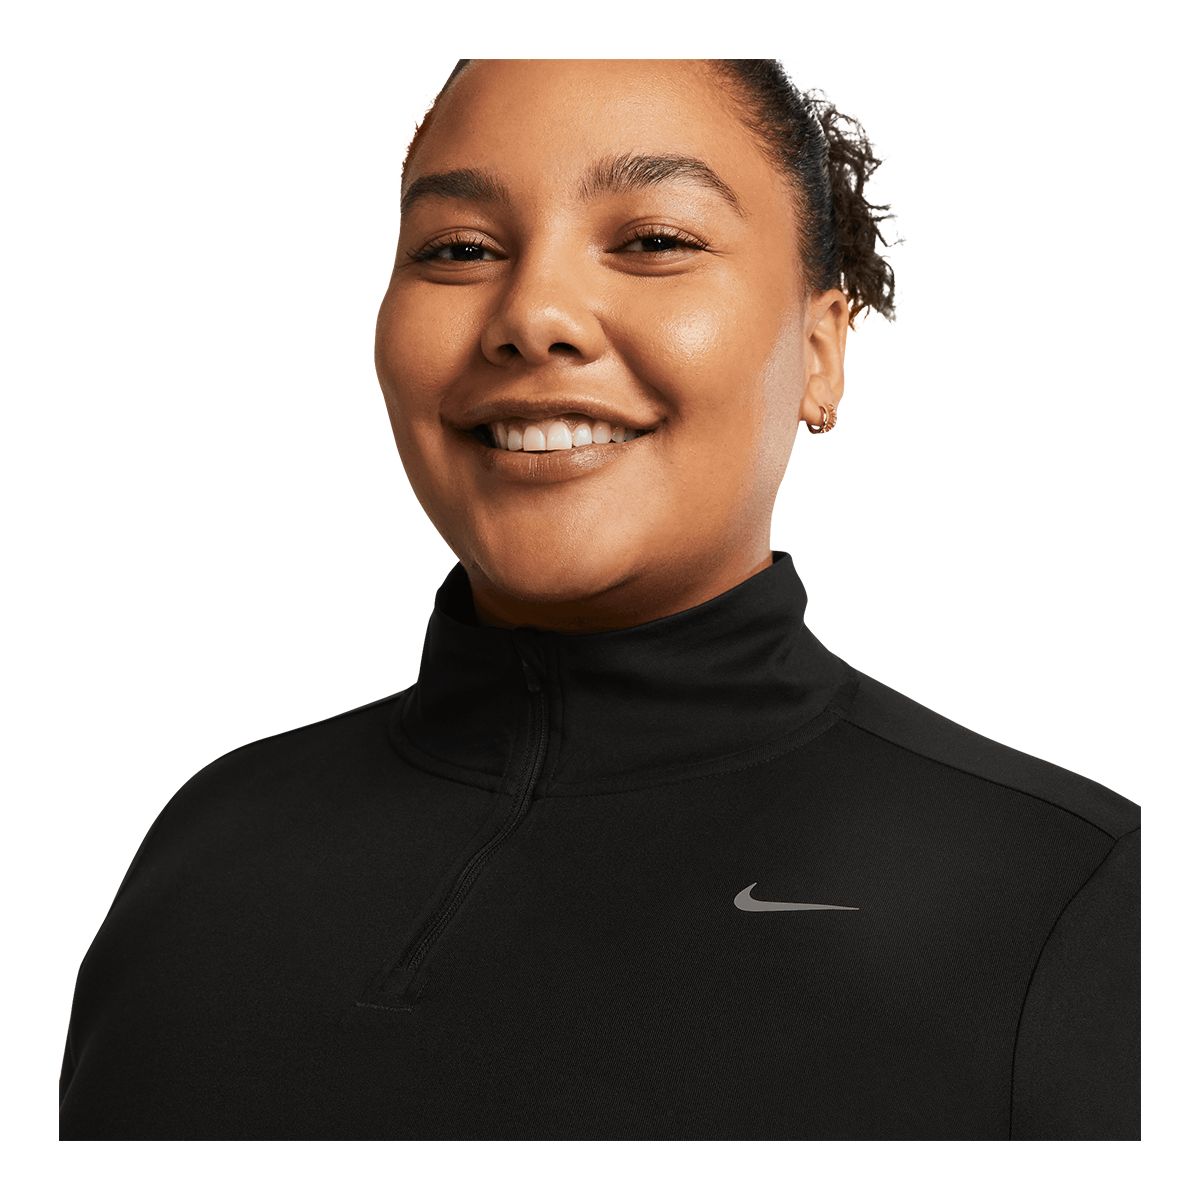 Nike Ladies Dri-FIT Element 1/2-Zip Top, Product